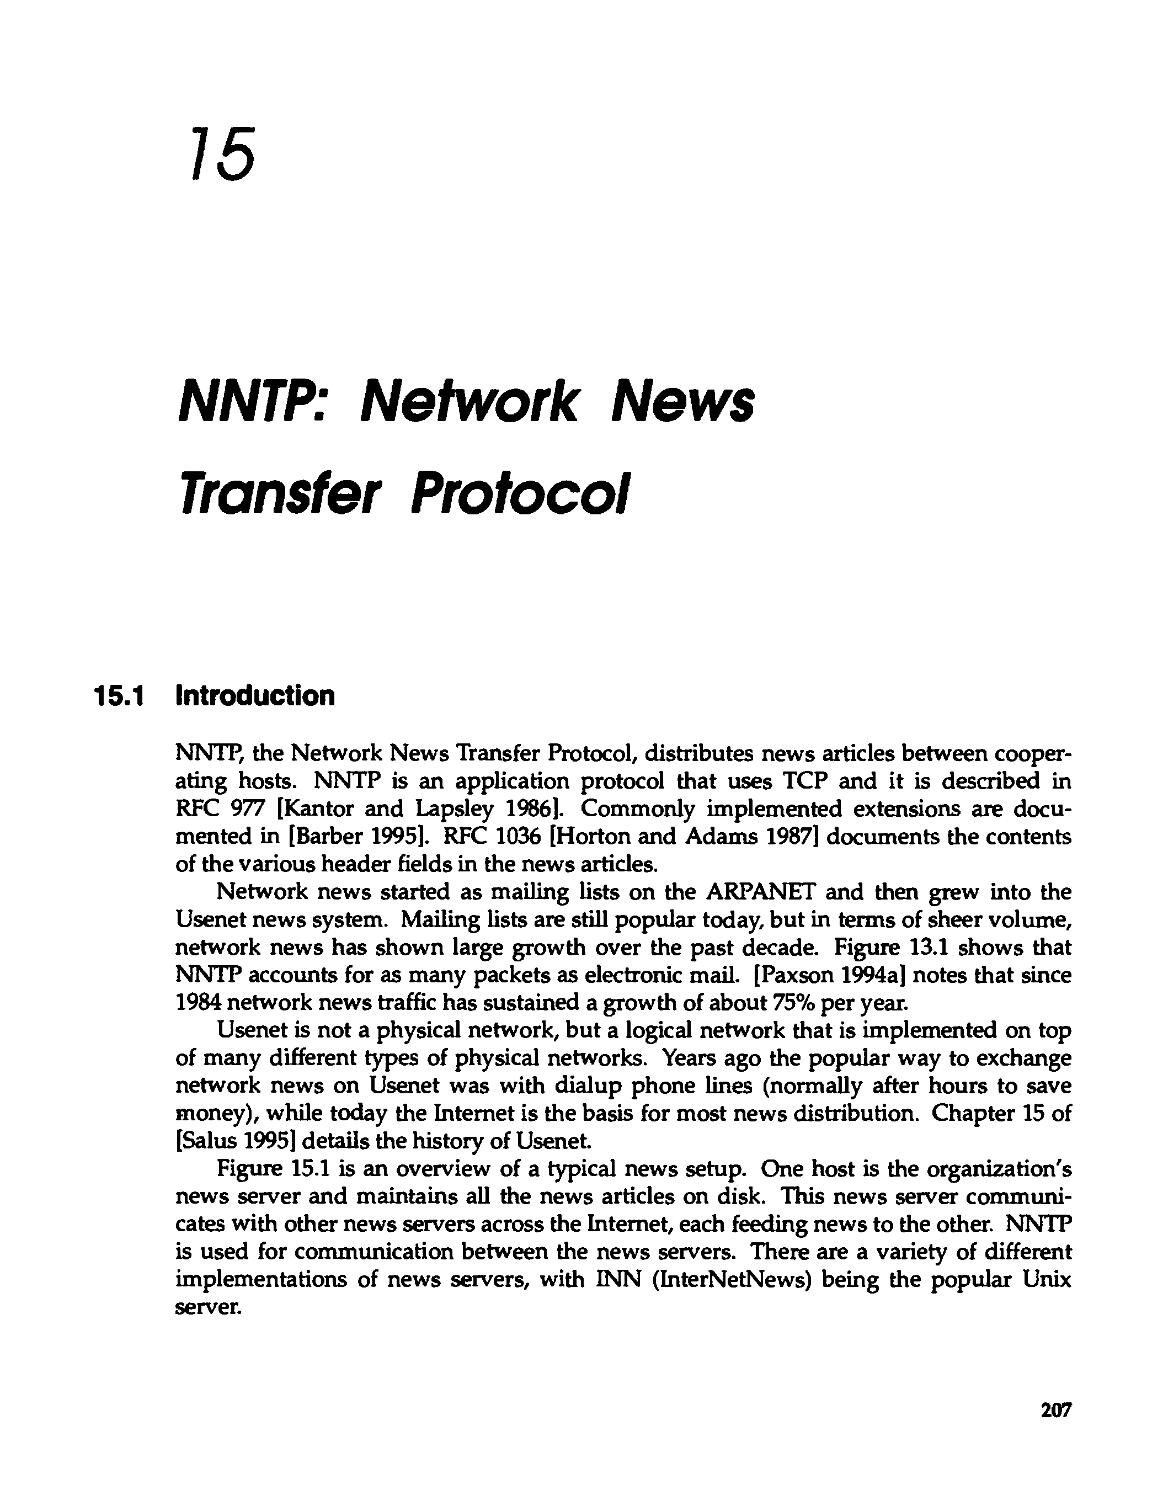 Chapter 15. NNTP: Network News Transfer Protocol